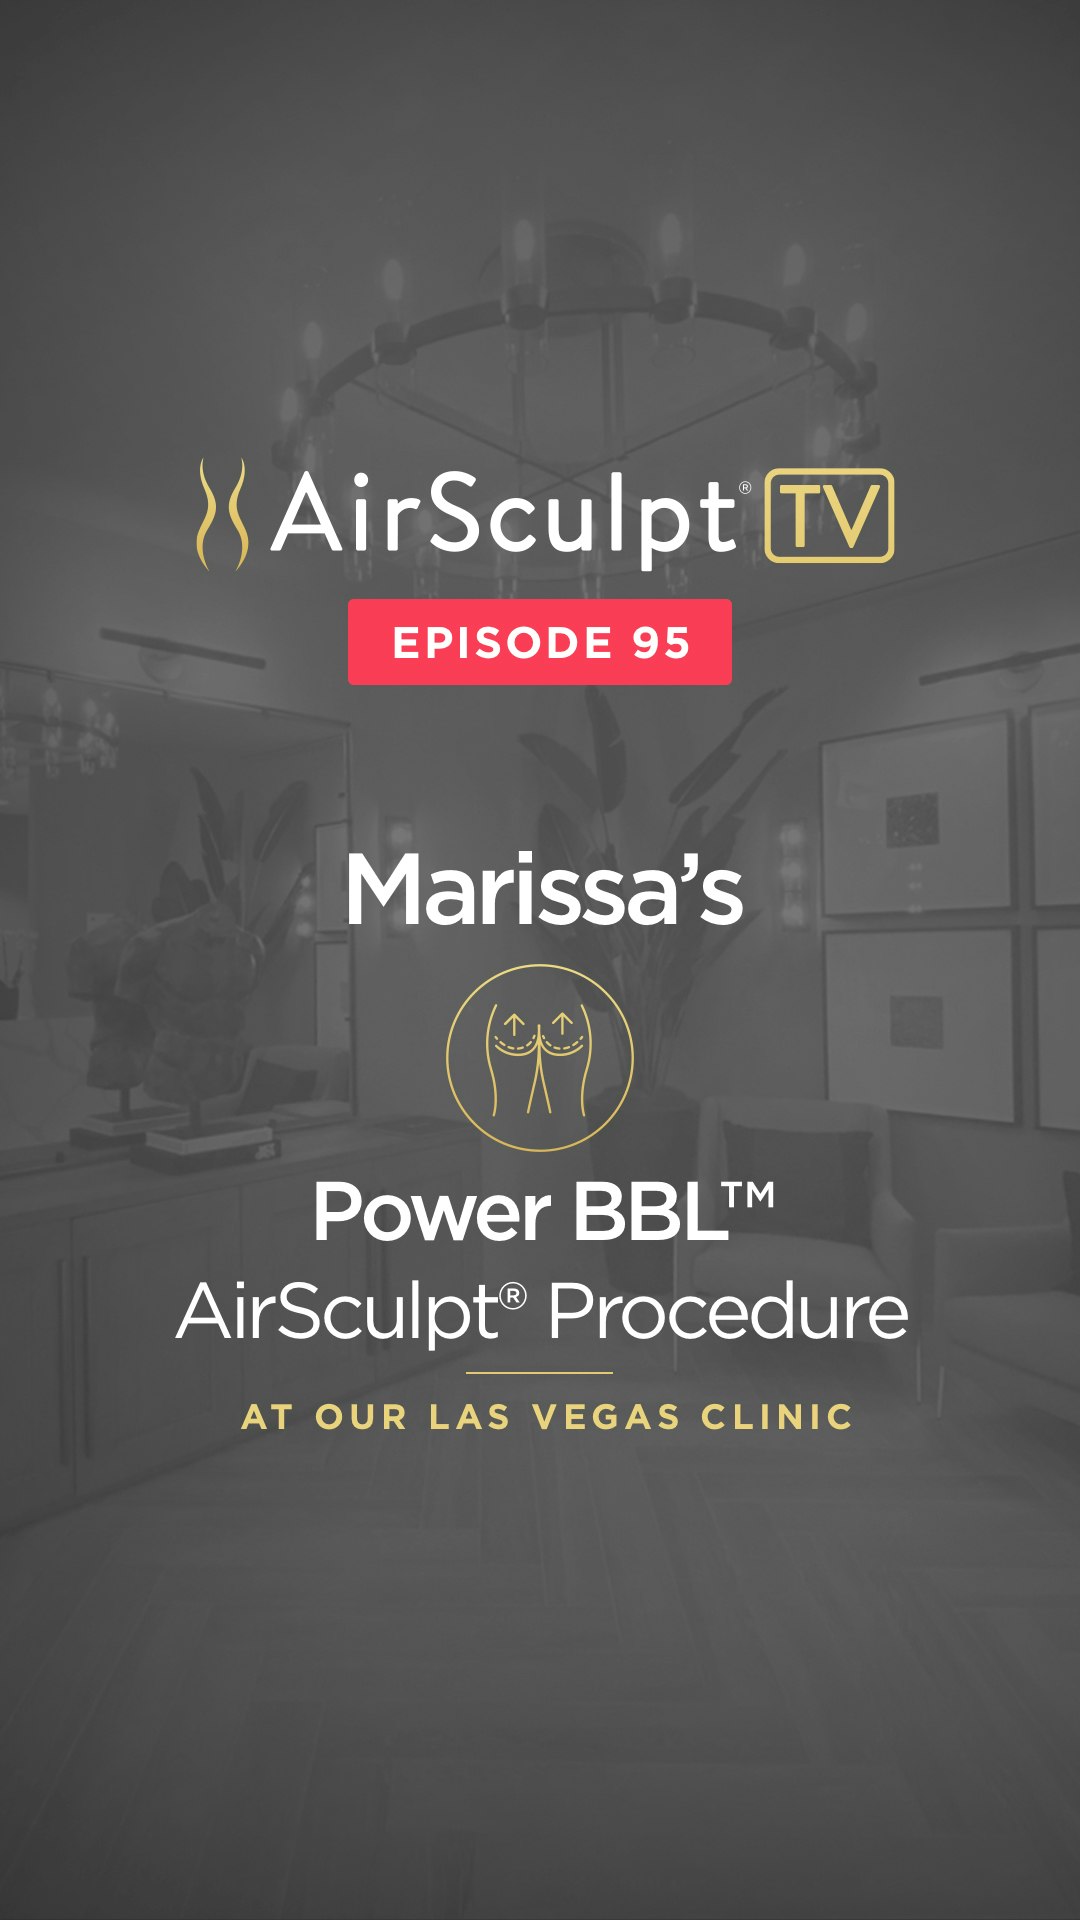 Marissa's airsculpt TV thumbnail